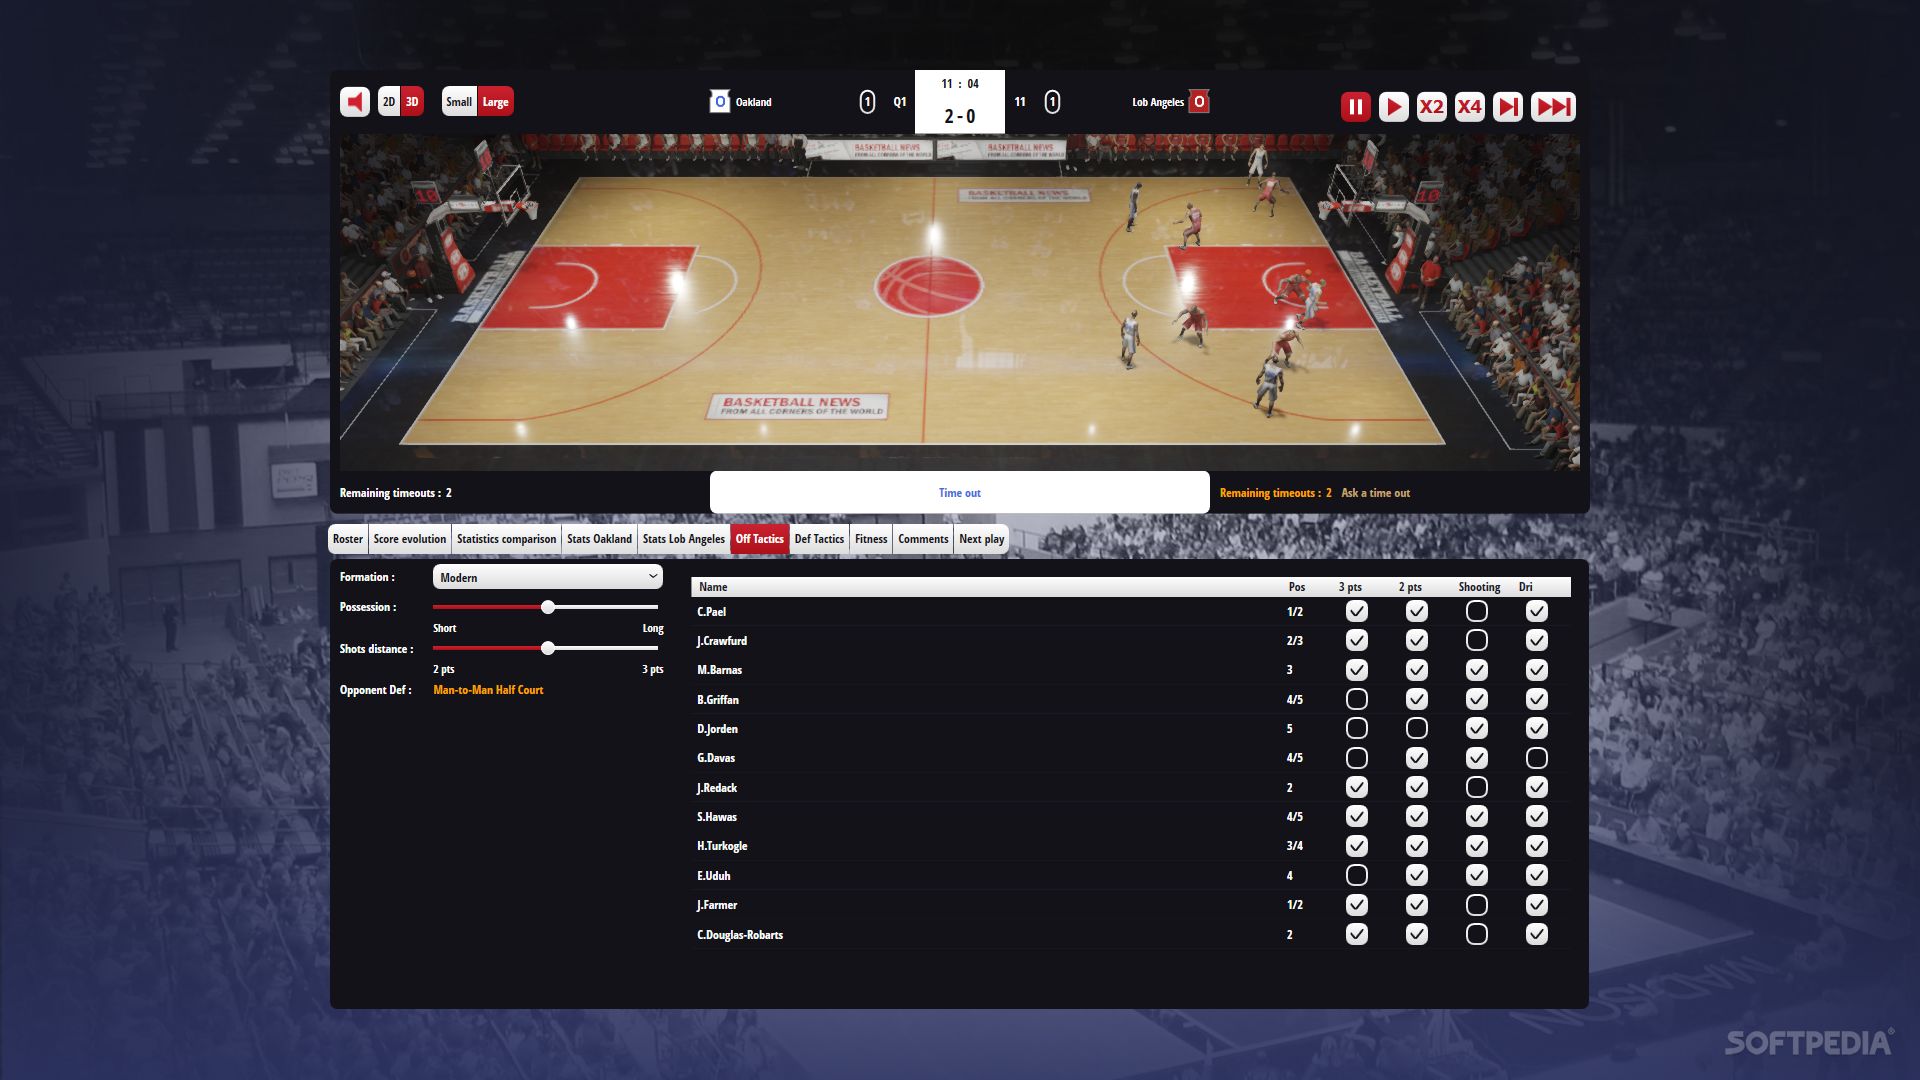 Basketball Pro Management 2015 Backgrounds, Compatible - PC, Mobile, Gadgets| 1920x1080 px